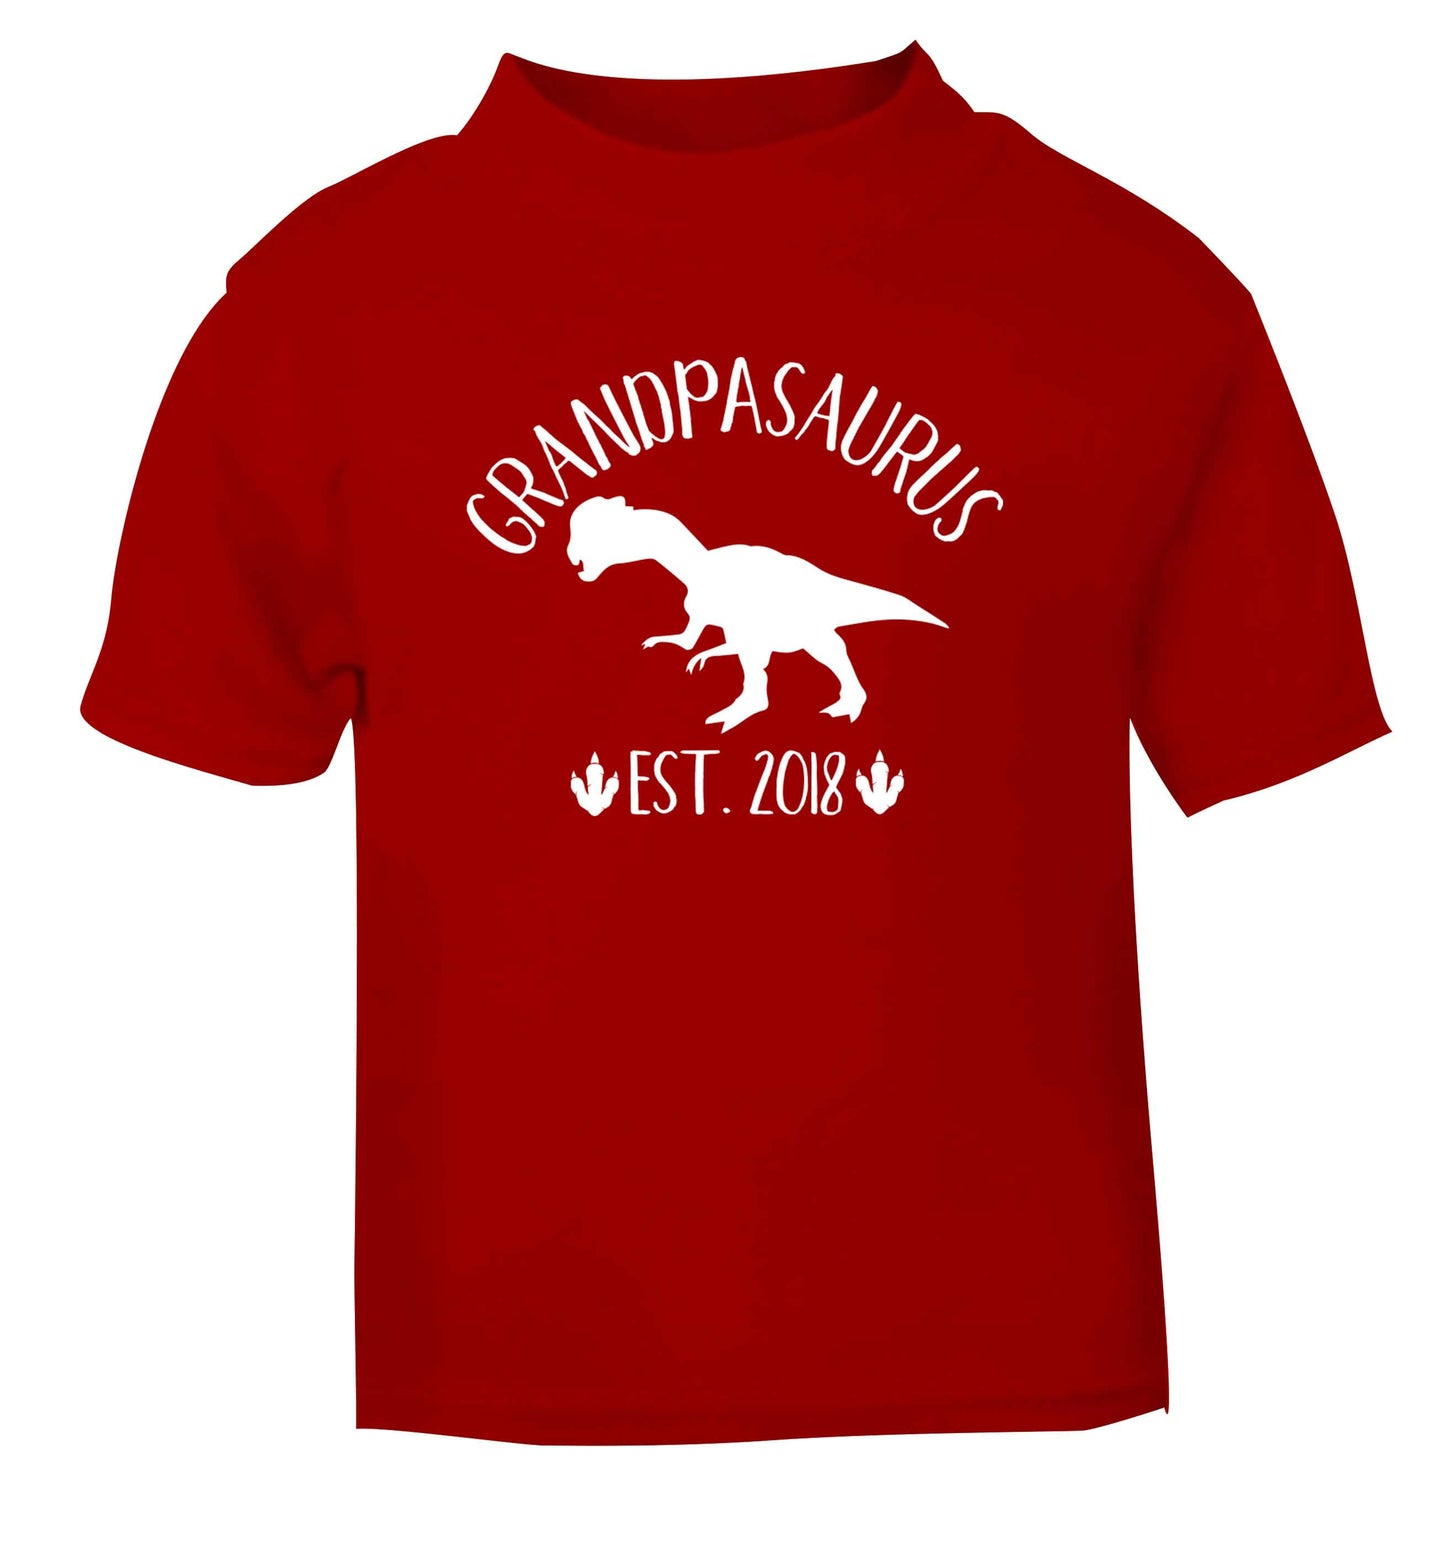 Personalised grandpasaurus since (custom date) red Baby Toddler Tshirt 2 Years